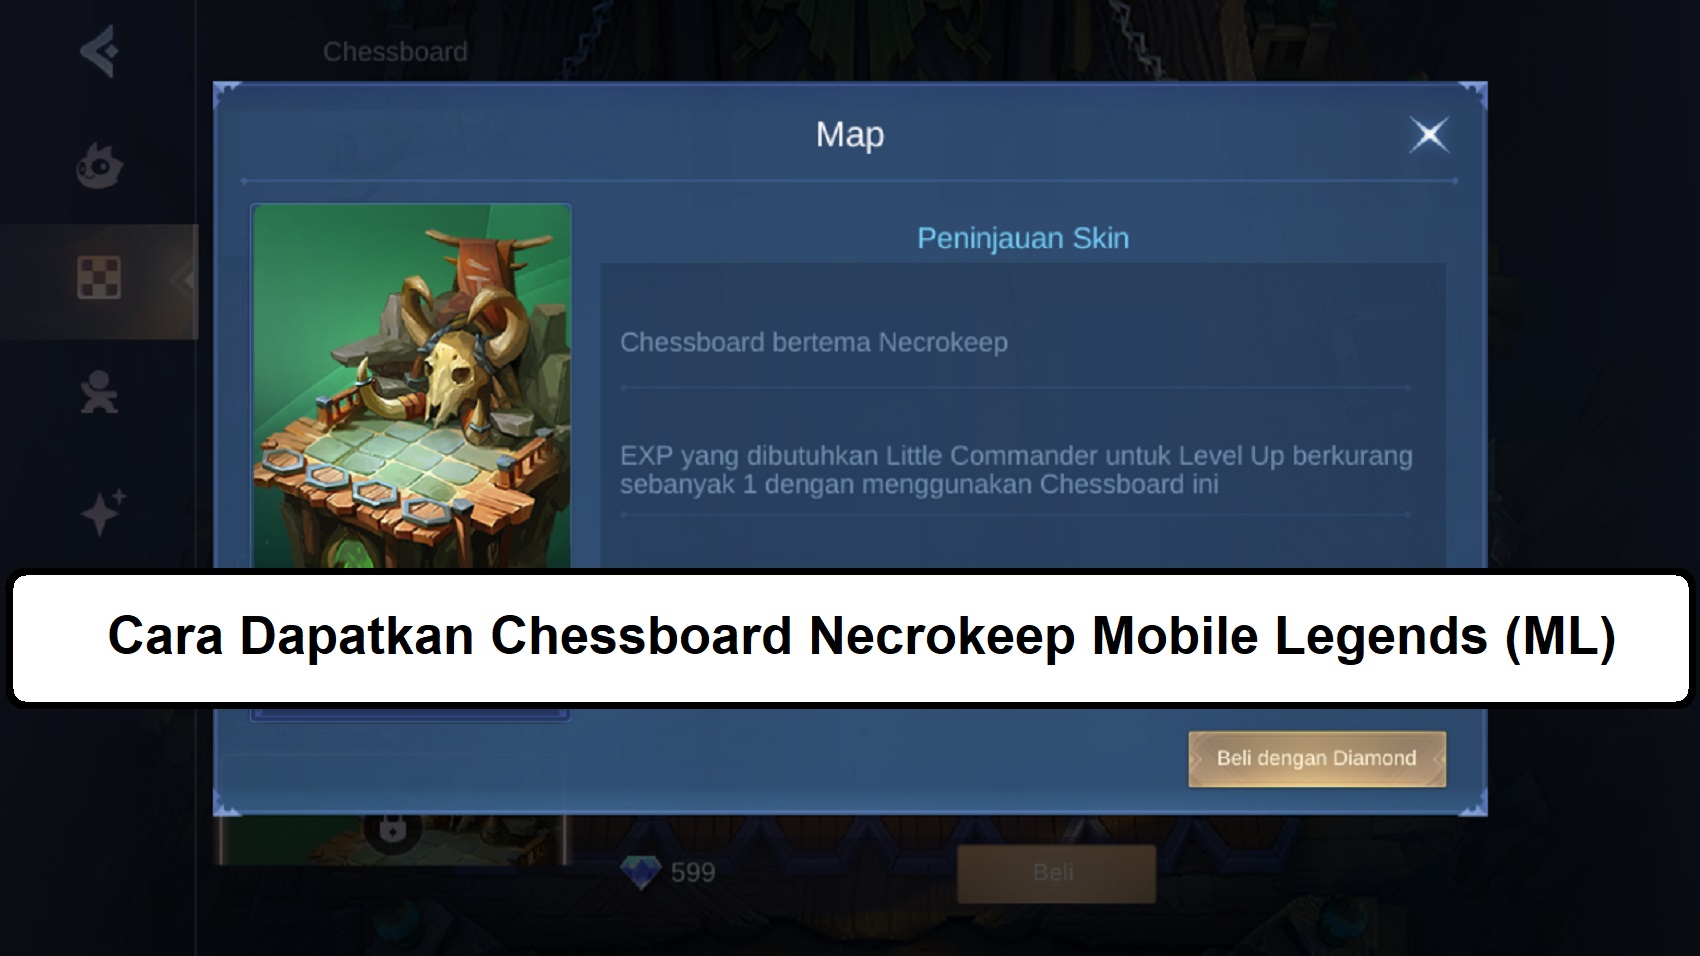 Cara Dapatkan Chessboard Necrokeep Mobile Legends (ML)